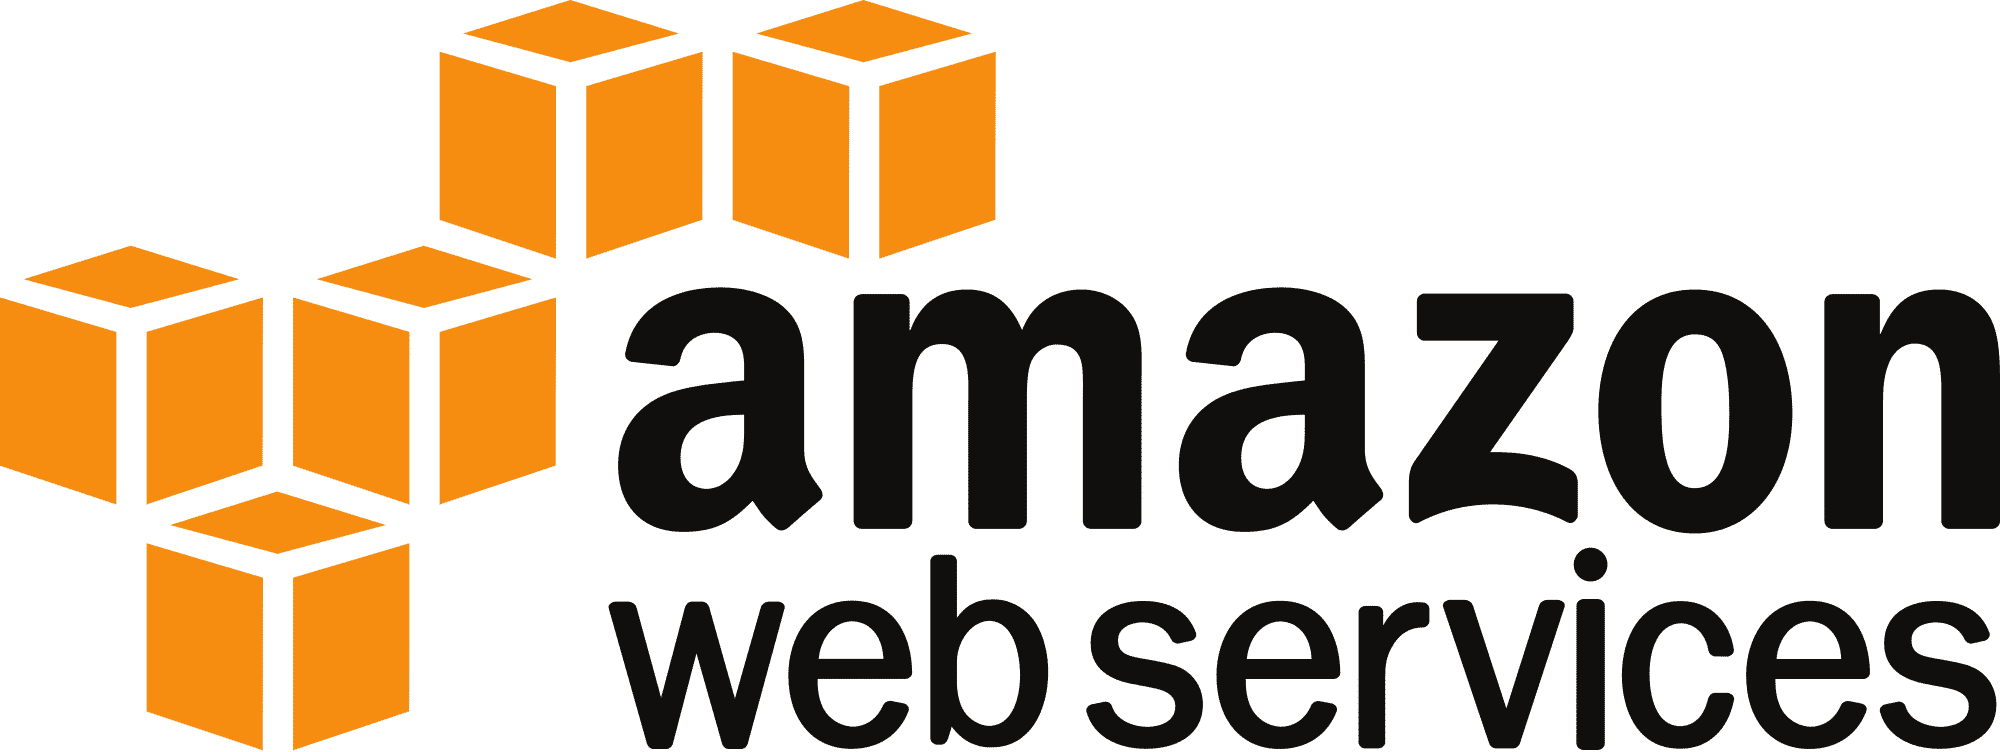 Is Amazon Web Services (AWS) HIPAA compliant?